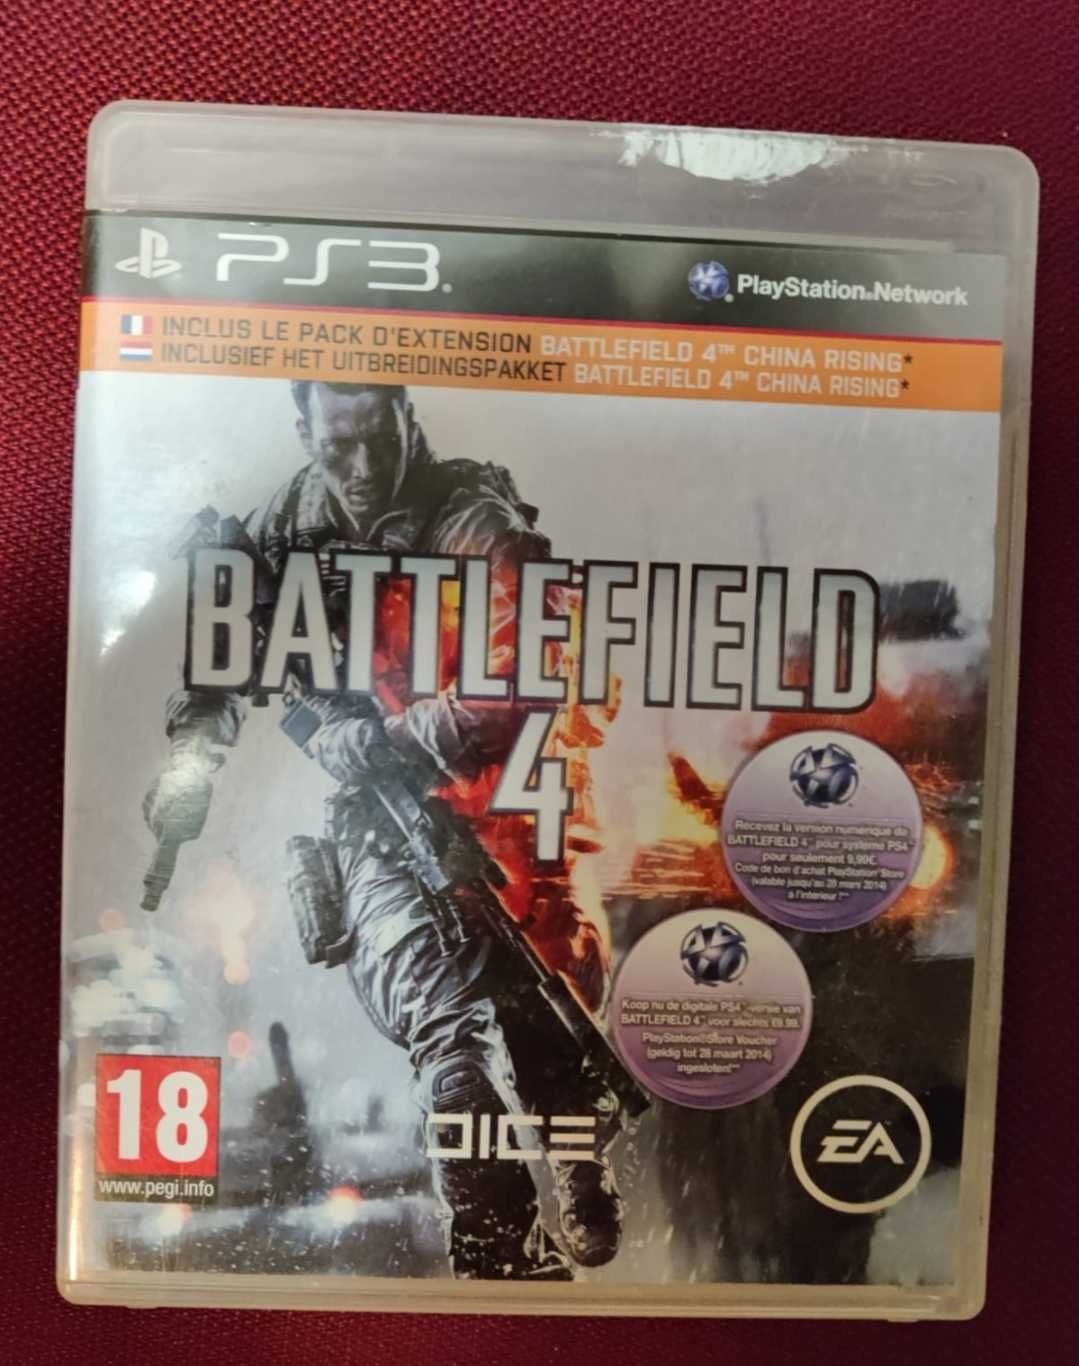 PS3 - Battlefield 4